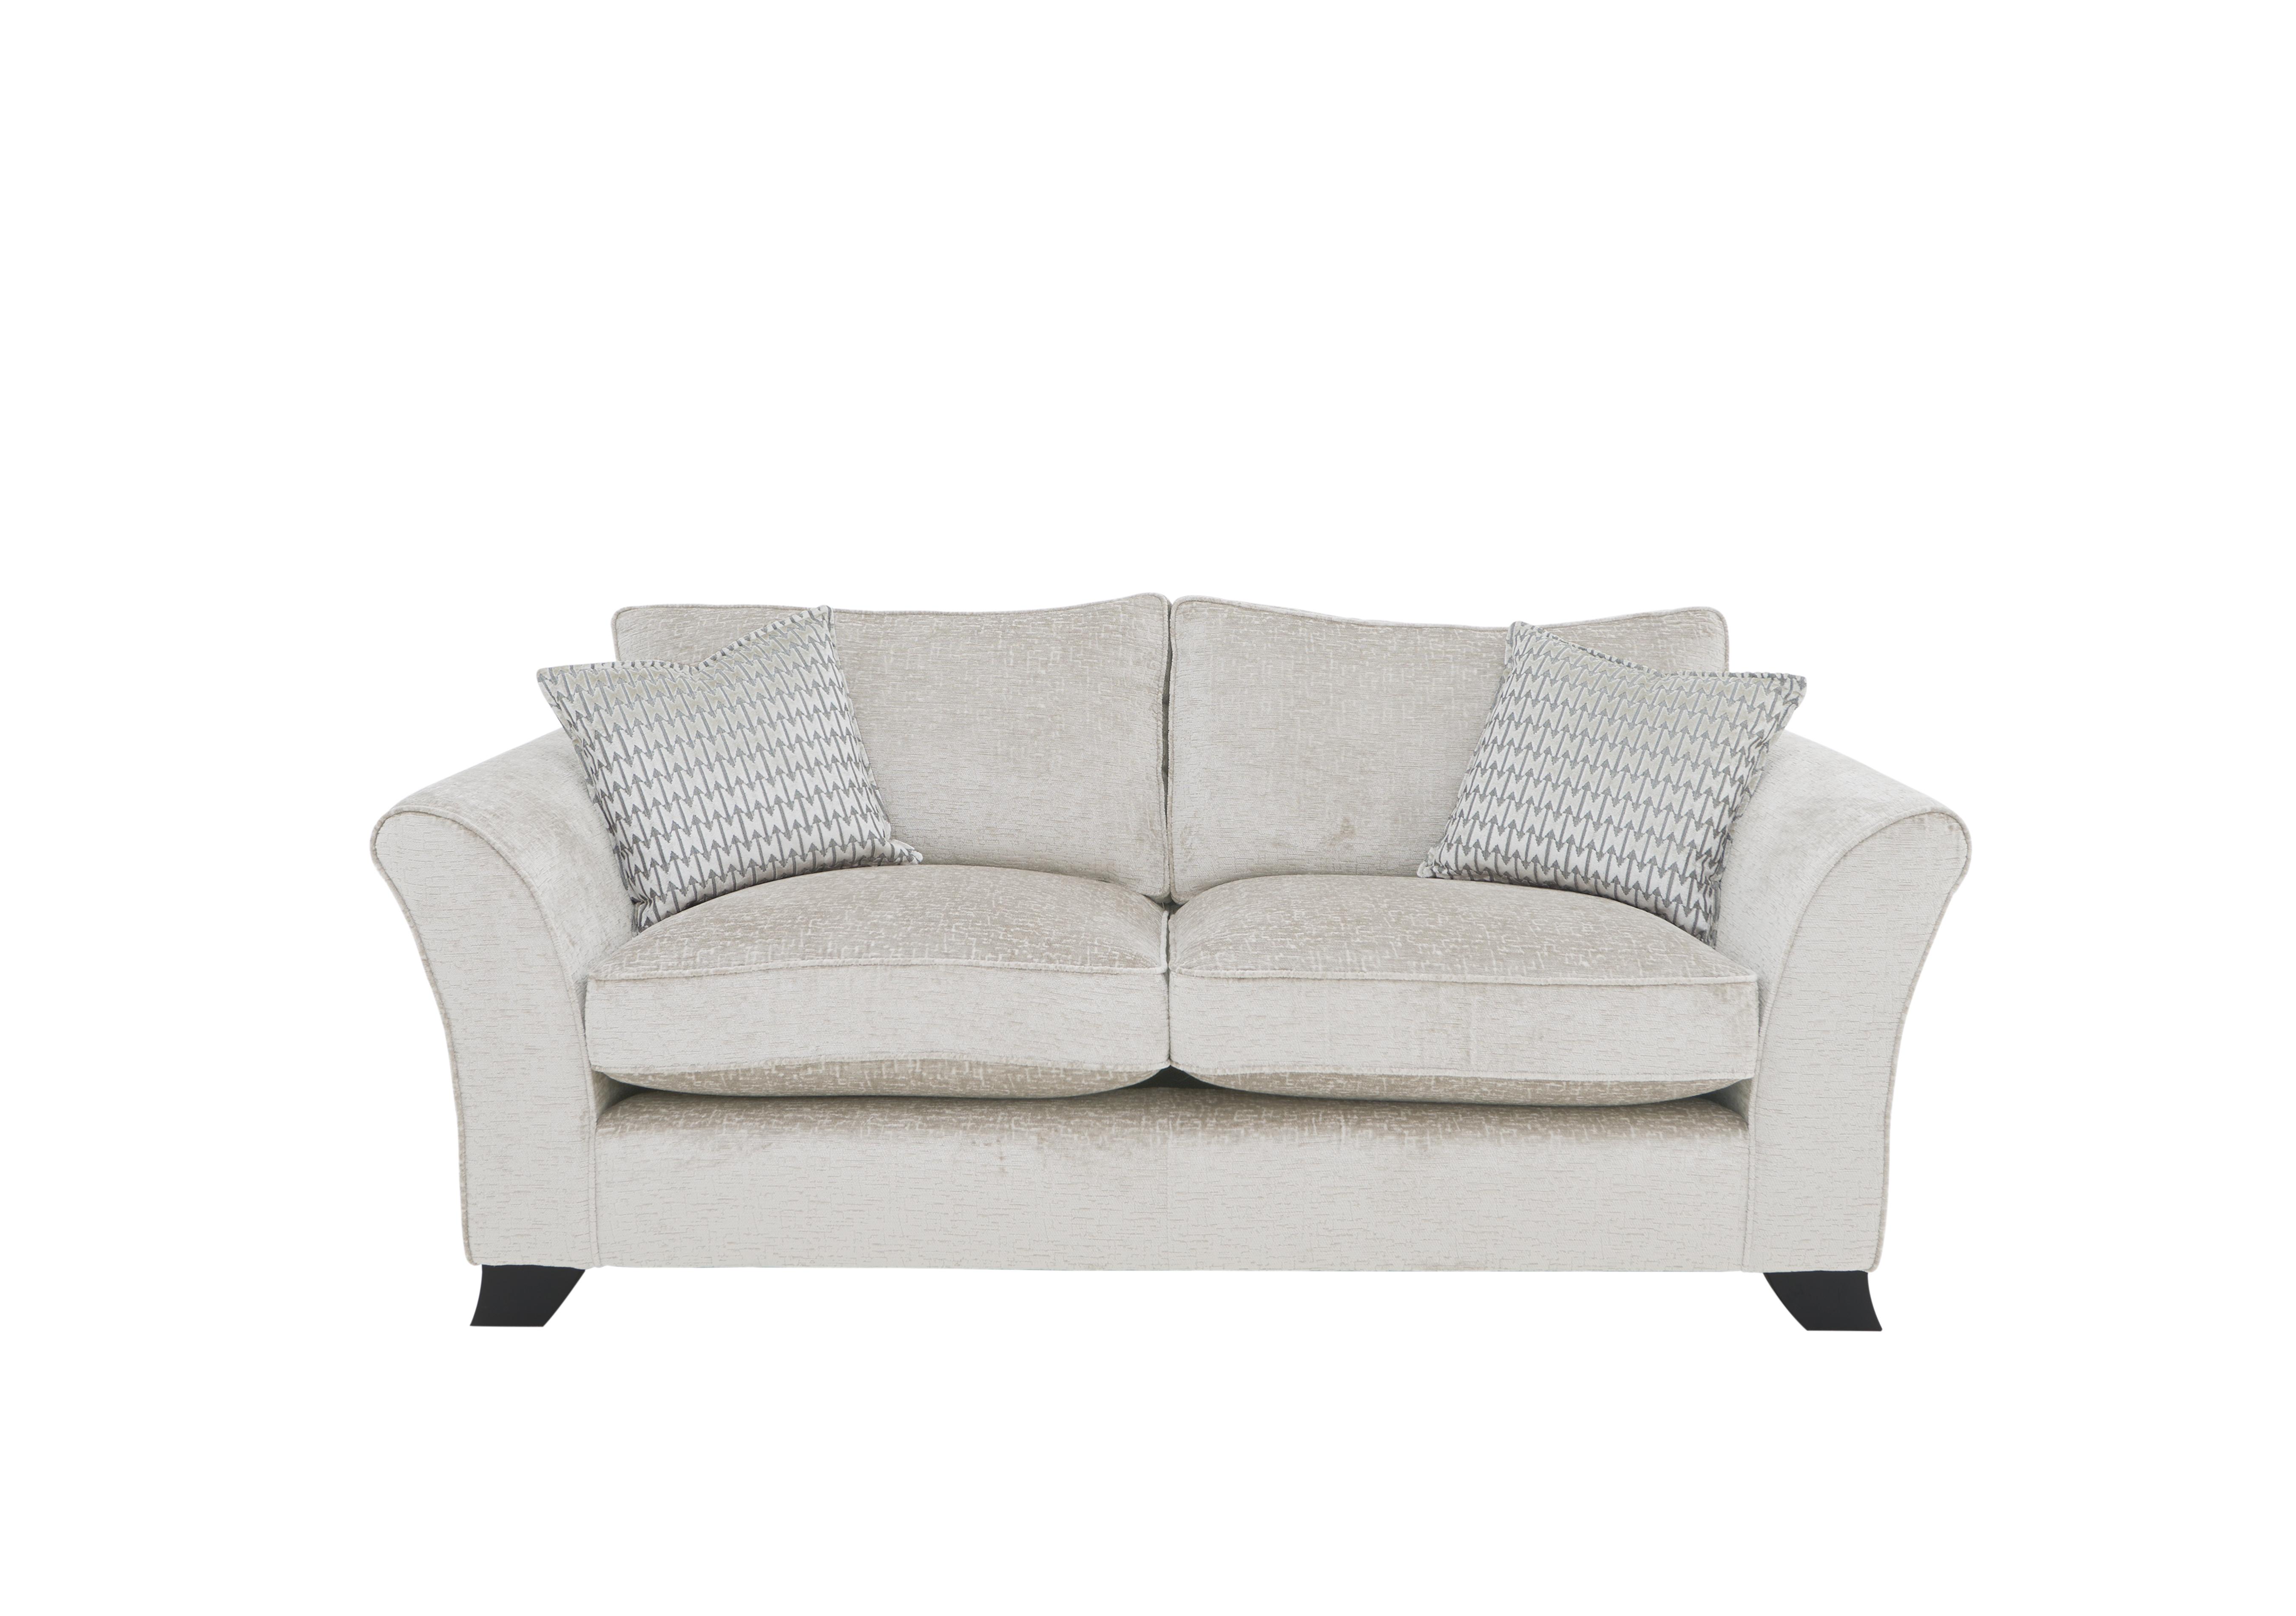 Sasha 3 Seater Classic Back Sofa Bed in Alexandra Natural on Furniture Village